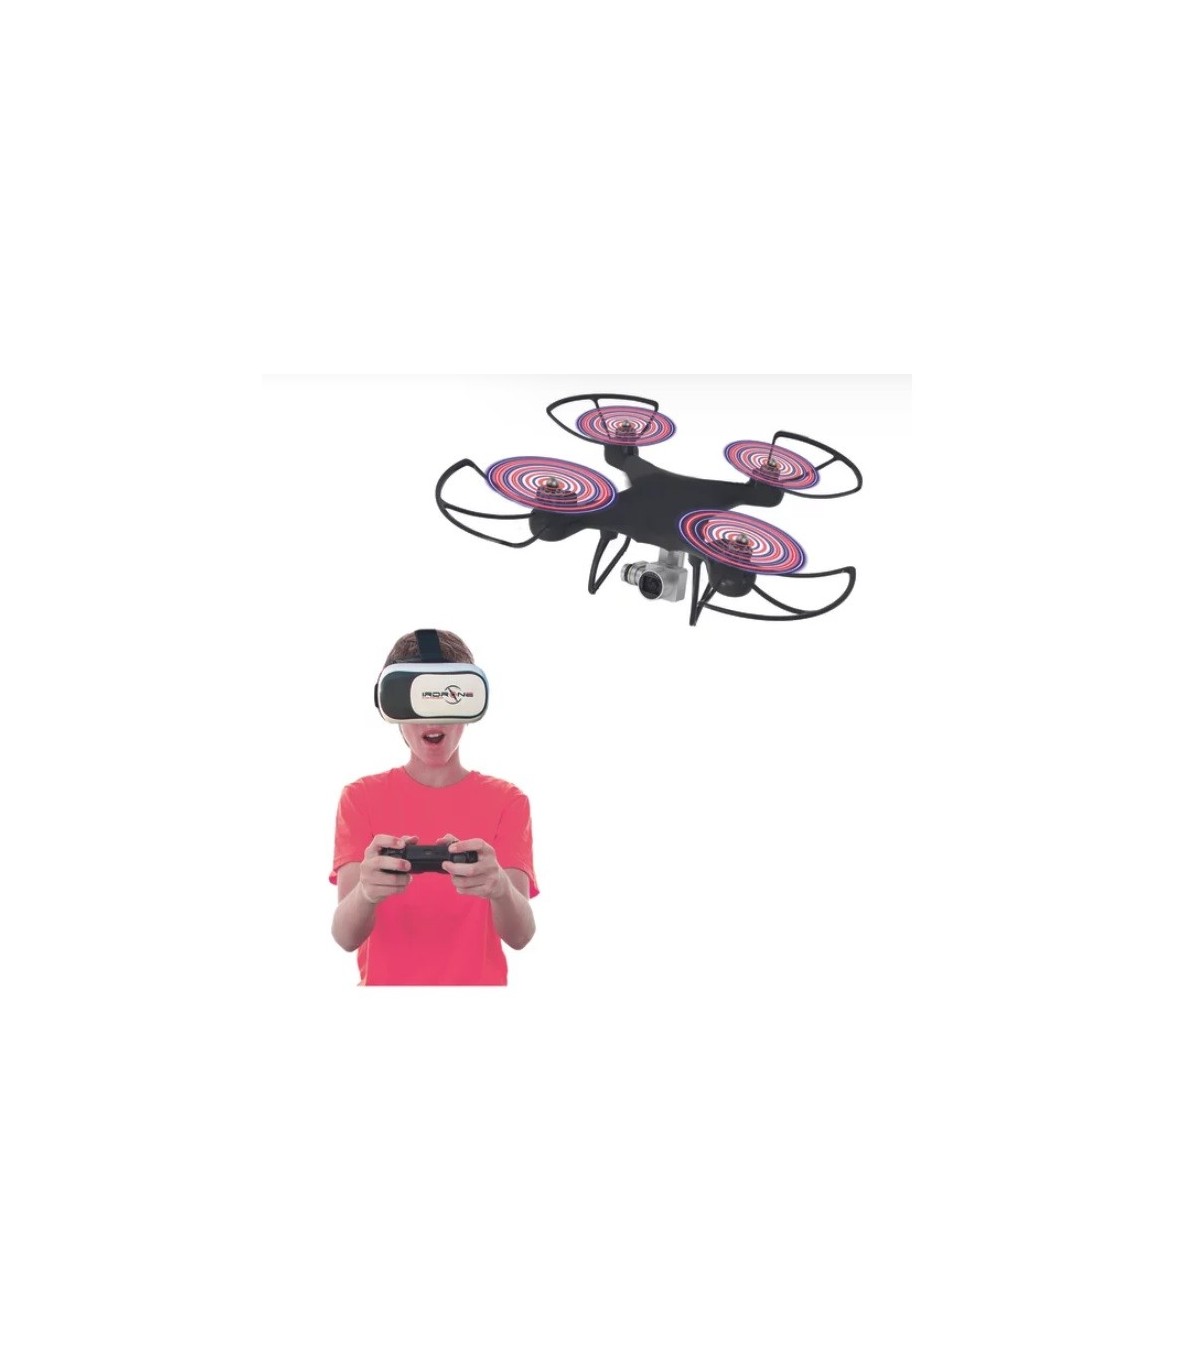 NEON DRONE VR – IrCorp